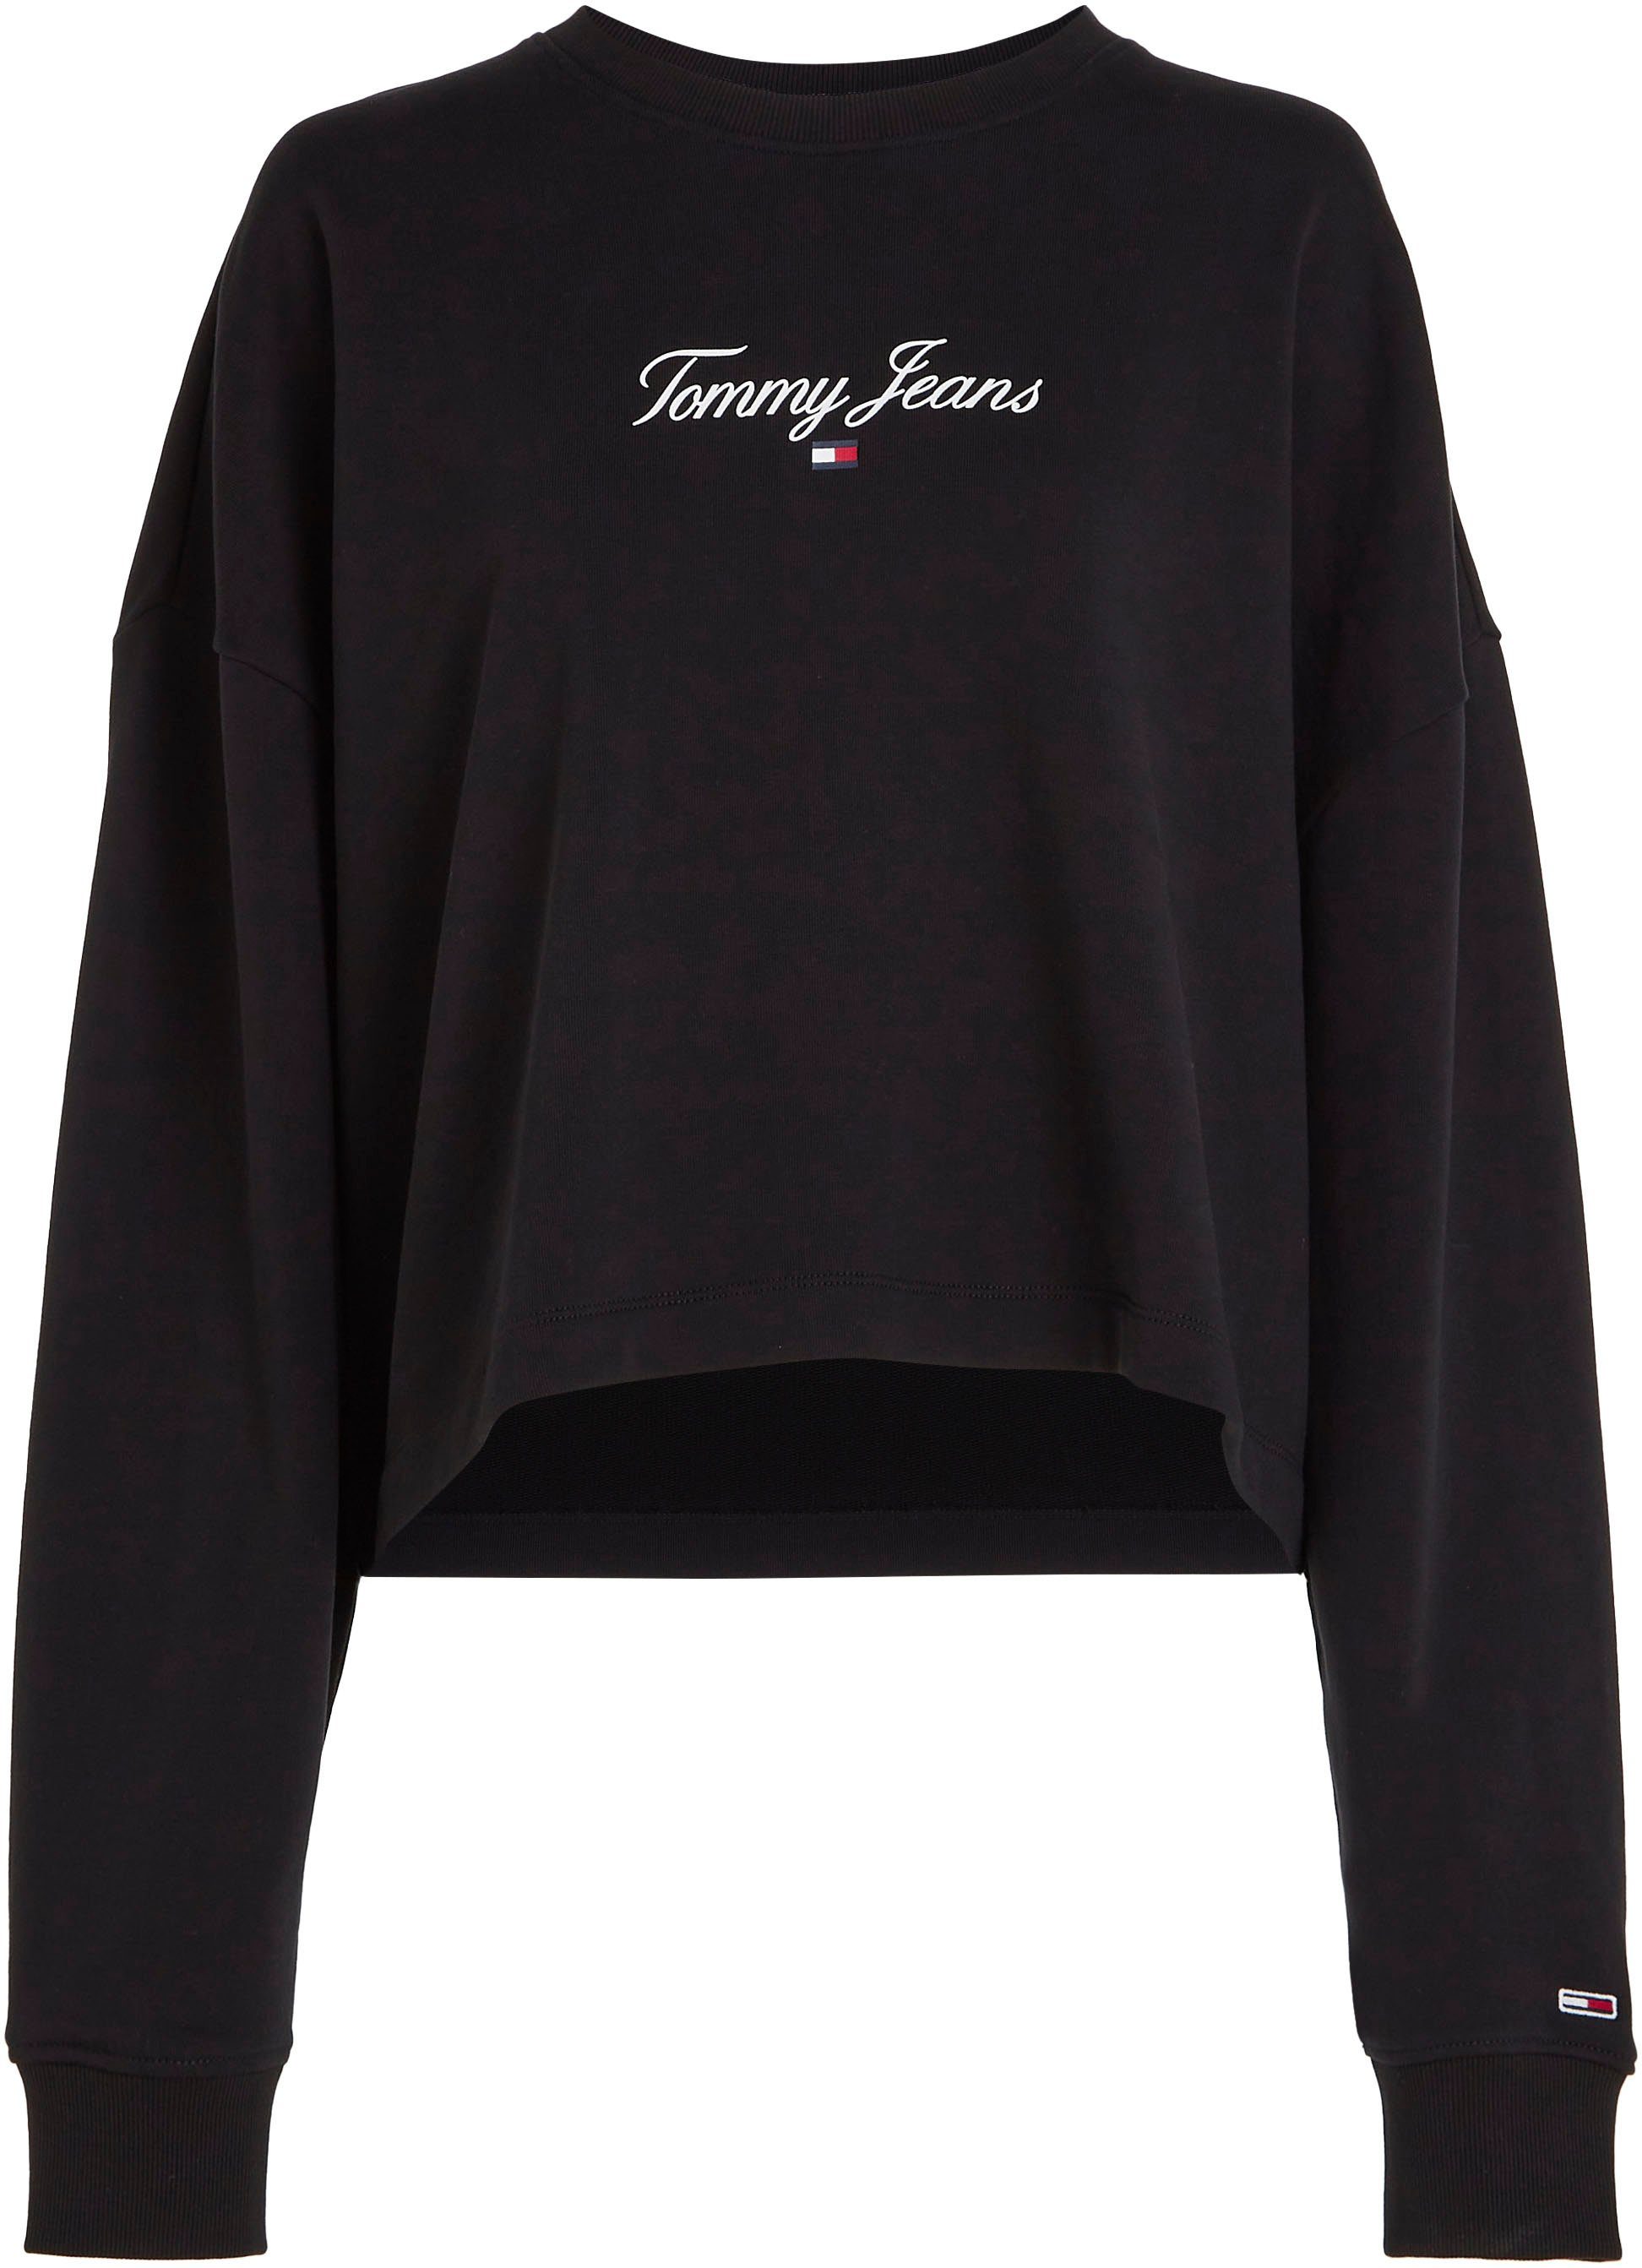 Tommy Curve CREW & Flag Jeans Logo-Schriftzug Jeans Sweatshirt PLUS ESSENTIAL CURVE,mit TJW CRV Tommy LOGO 1 SIZE